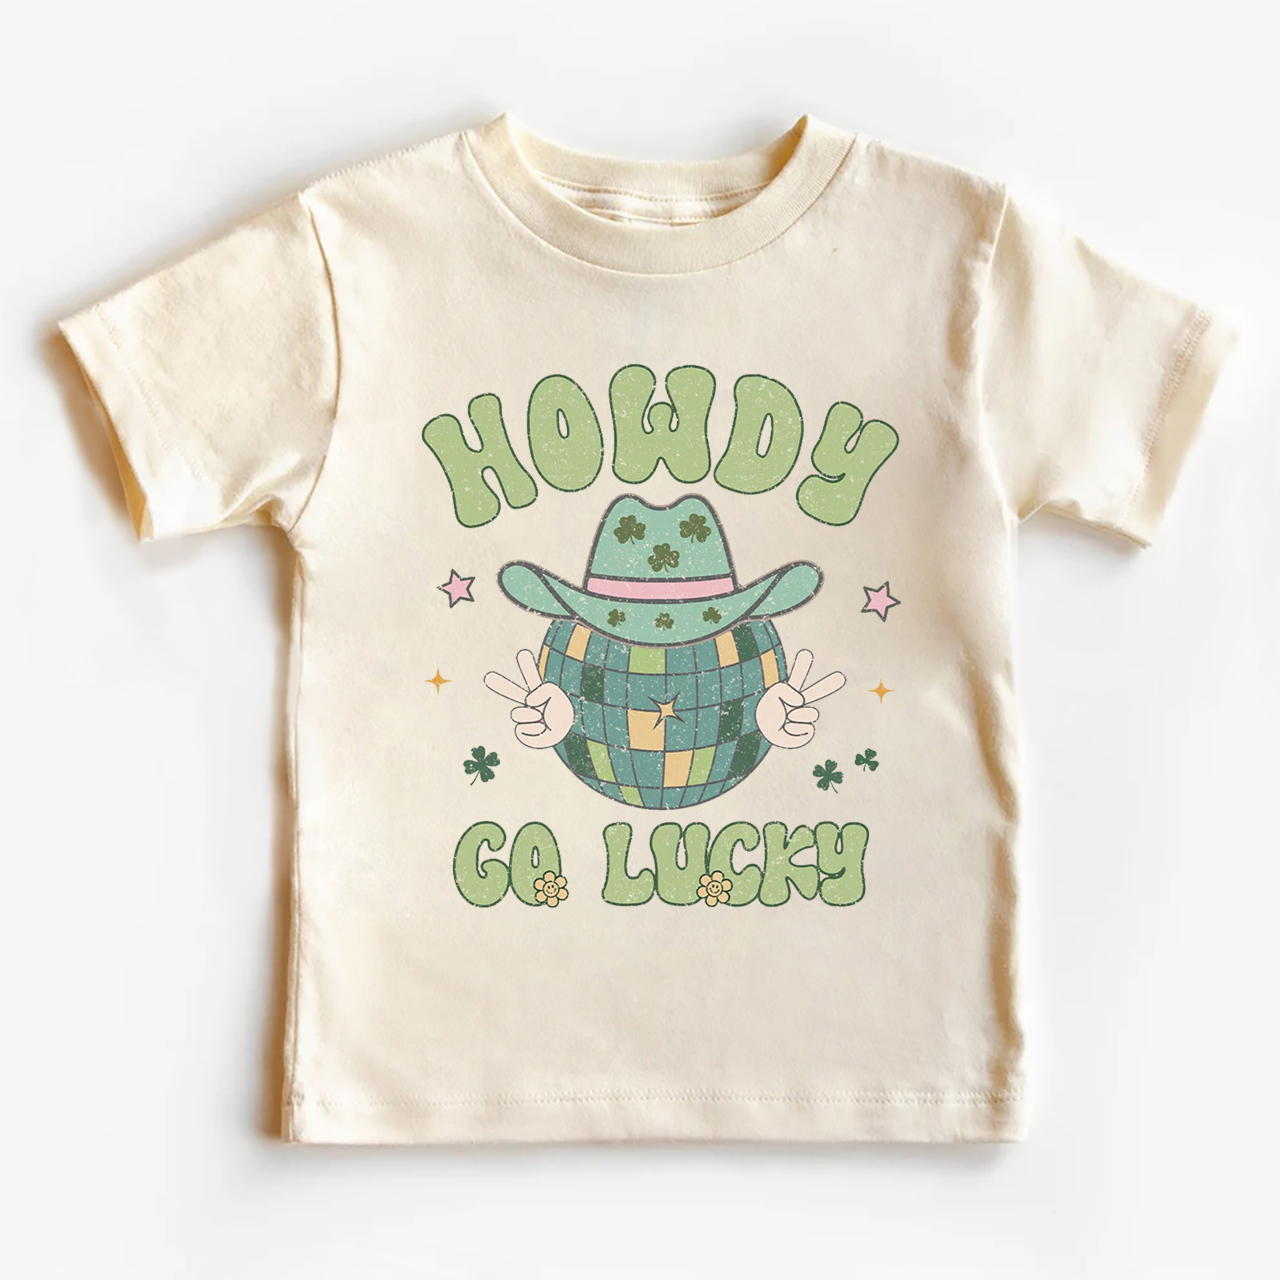 Howdy Go Lucky Toddler Shirt